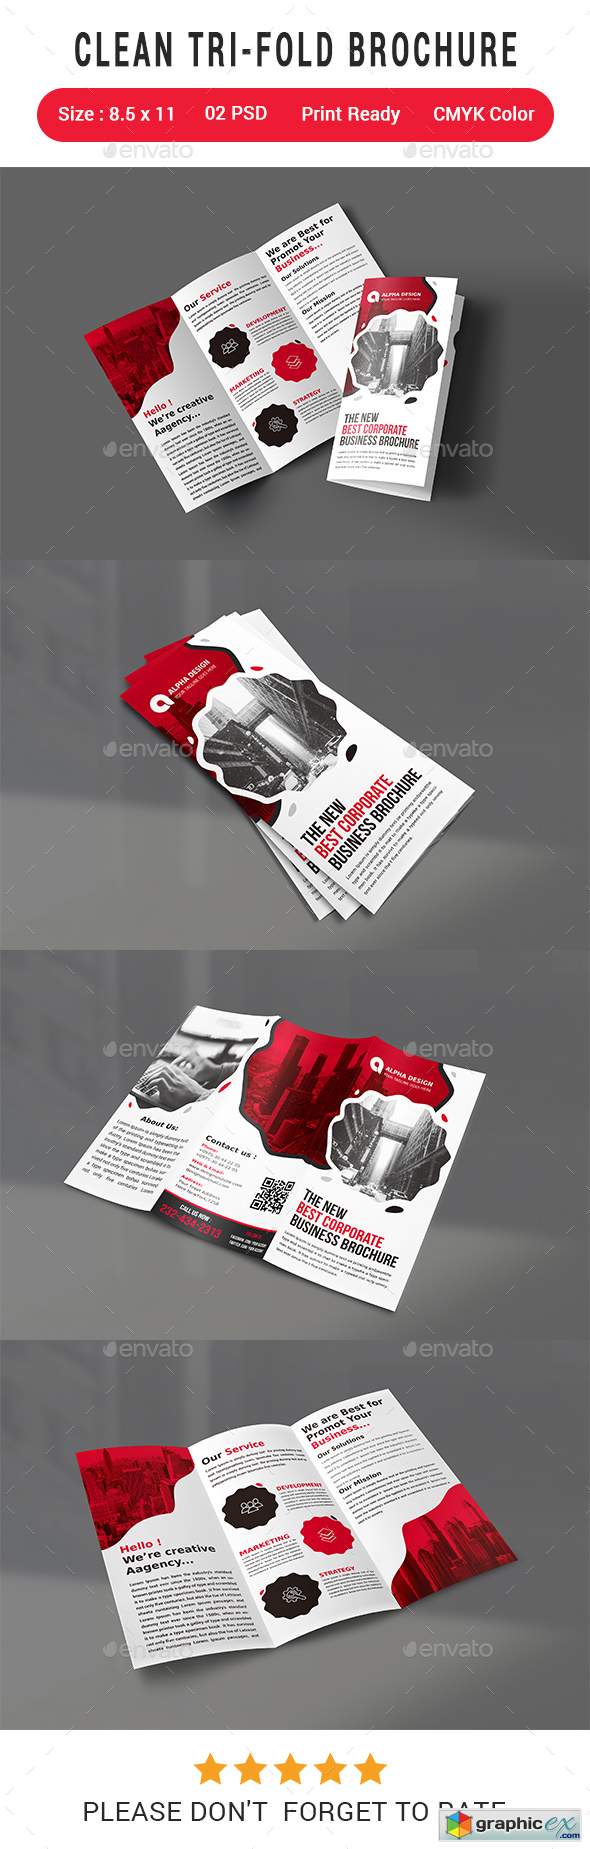 Clean Tri-fold Brochure 22117442